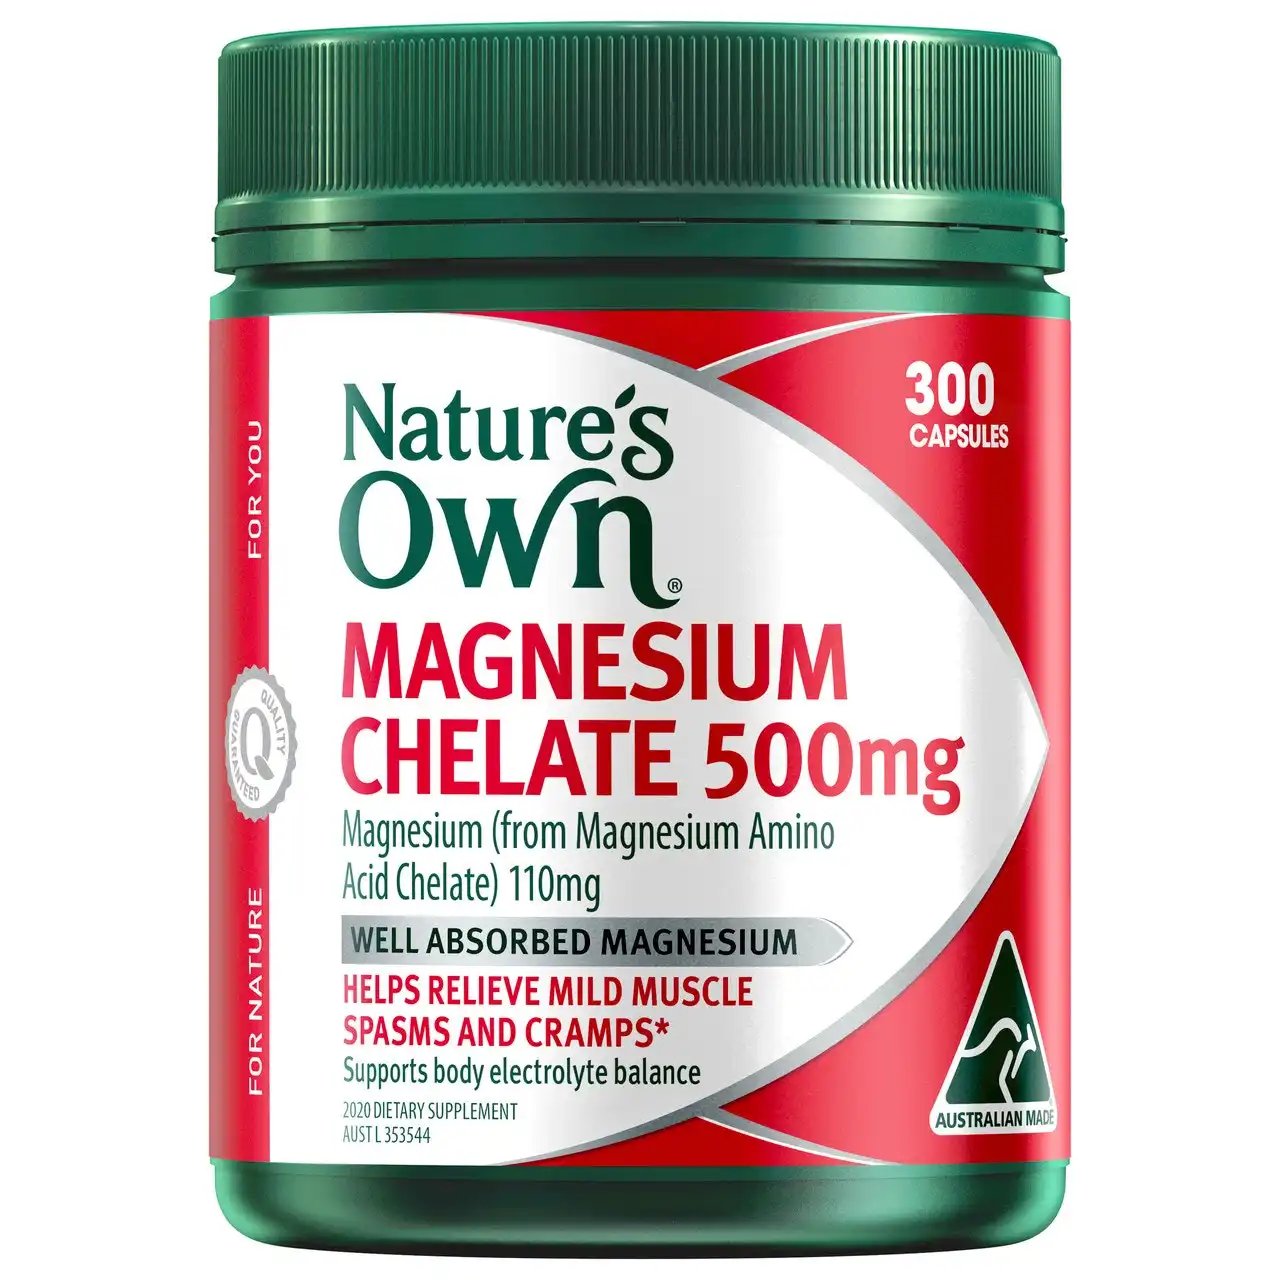 Nature's Own Magnesium Chelate 500mg 300 Capsules